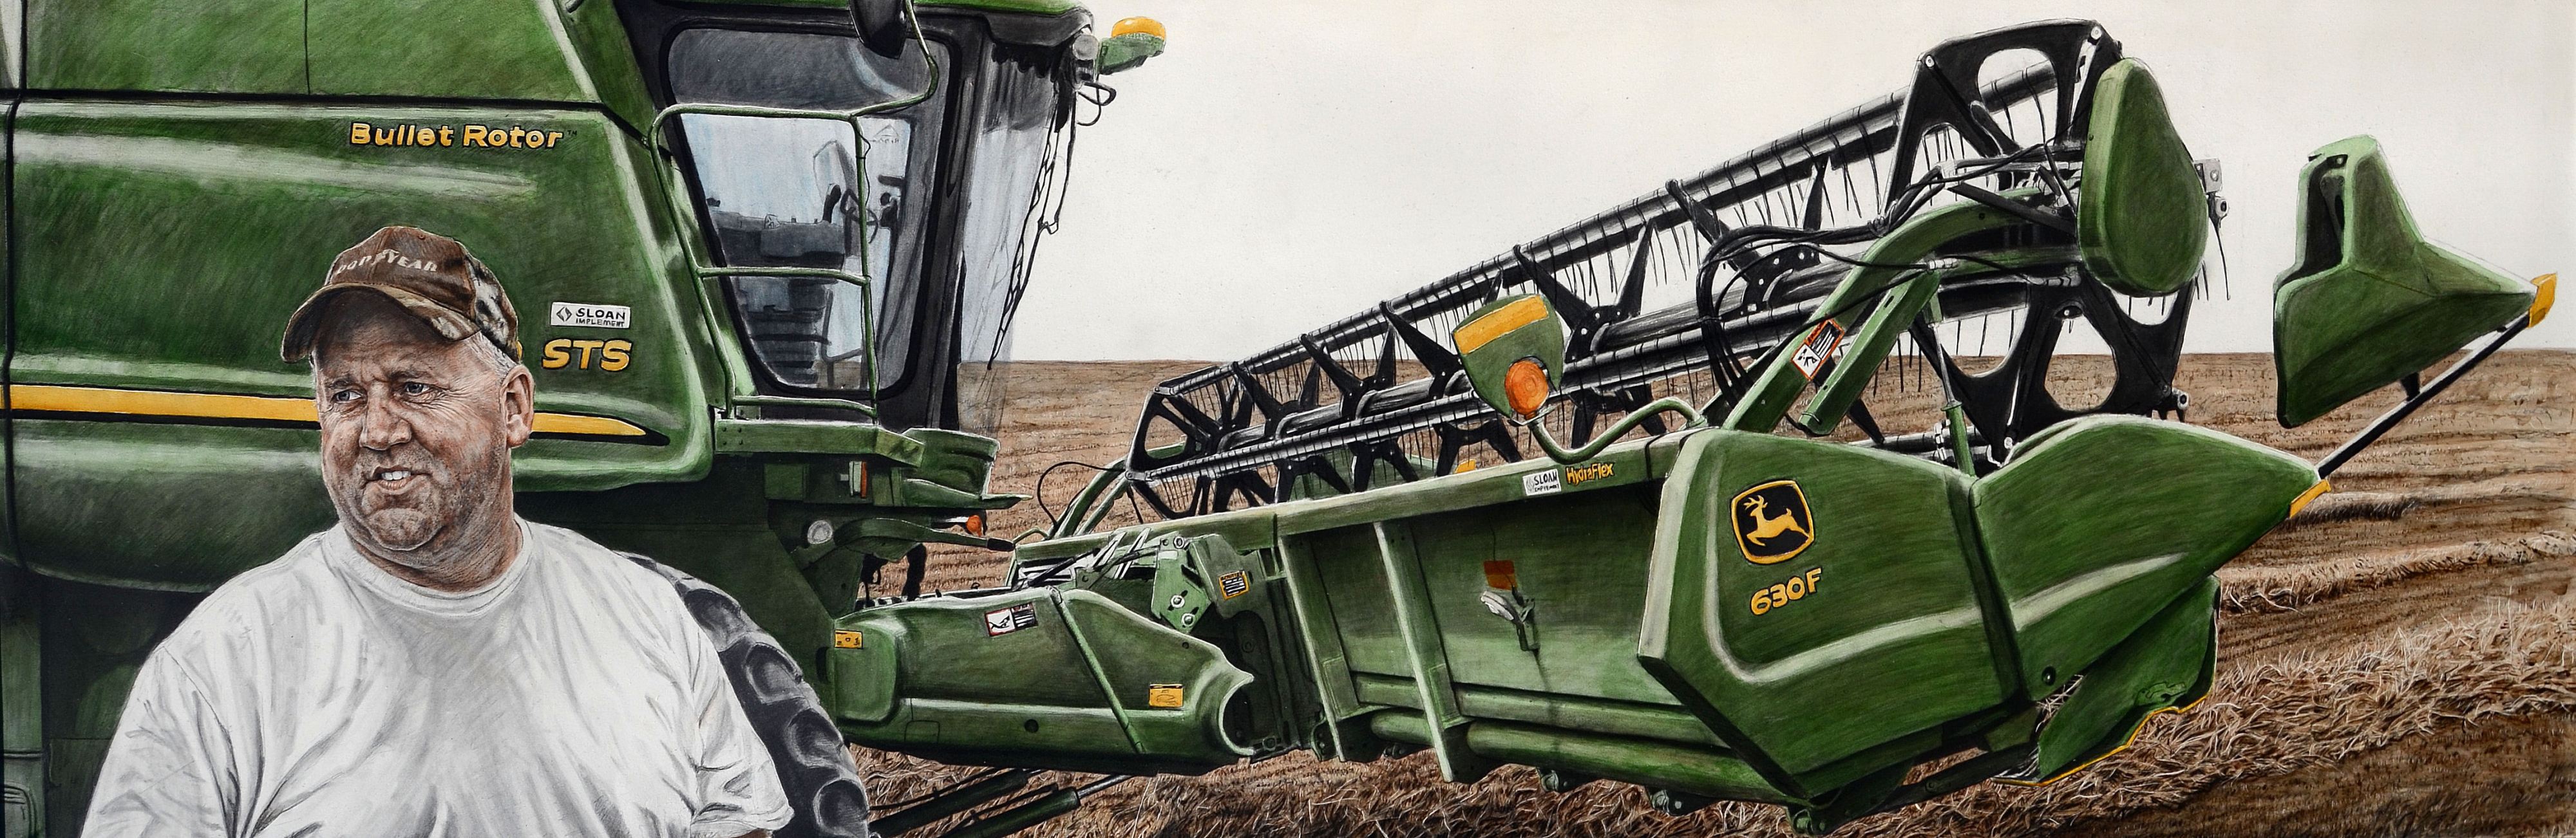 3 Robert Jinkins Harvesting the Winter Wheat 2015